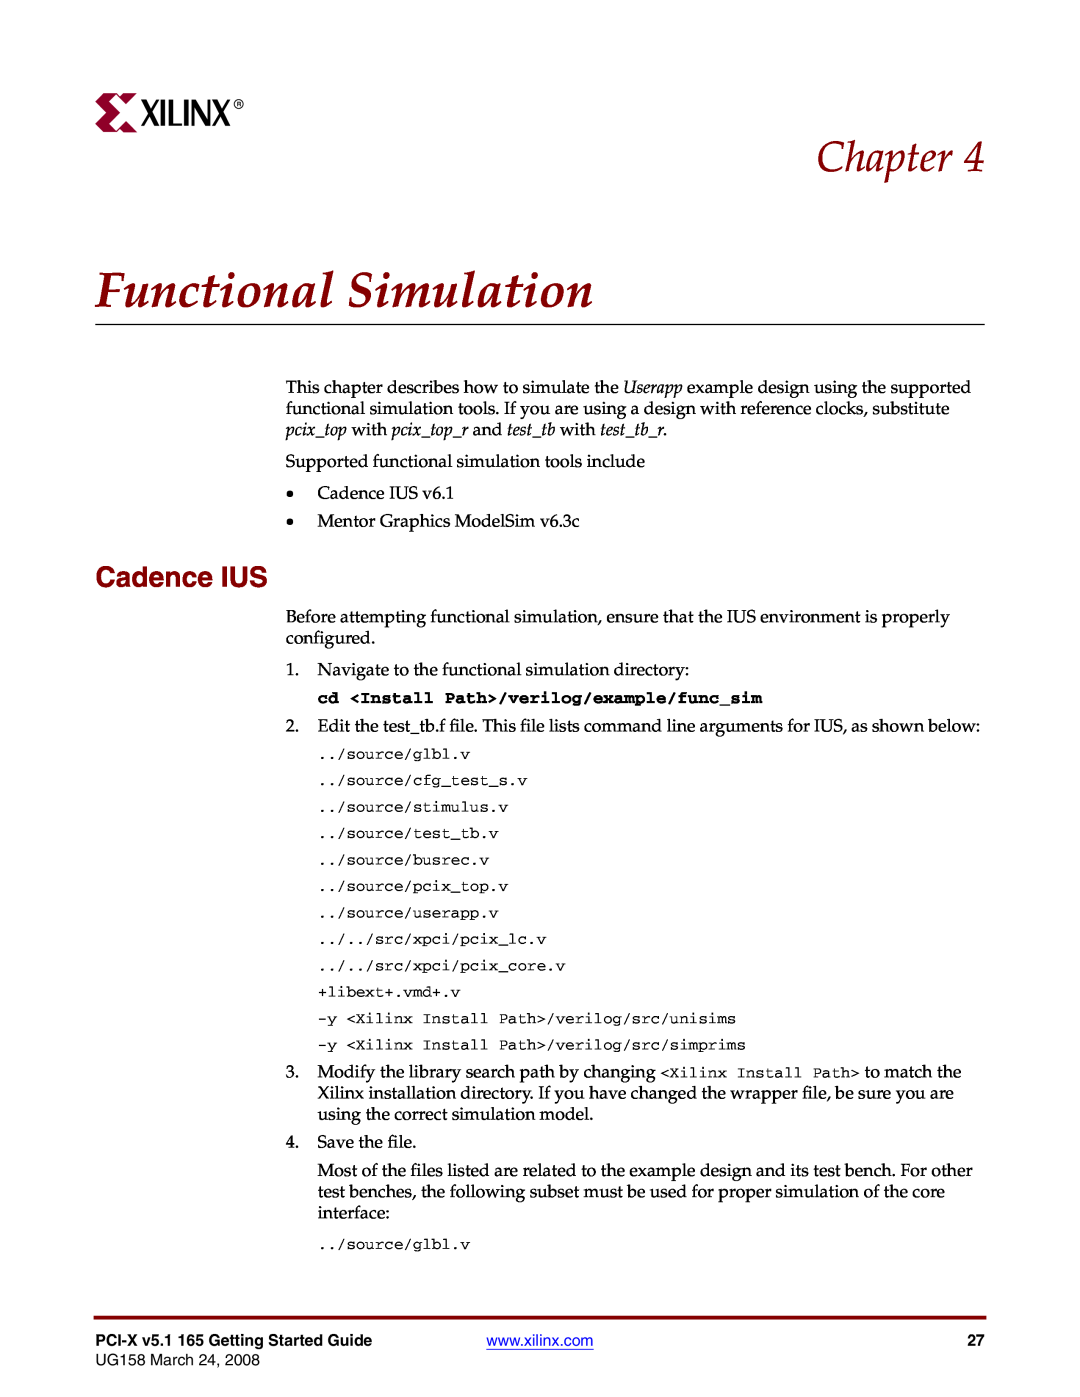 Xilinx PCI-X v5.1 manual Functional Simulation, Cadence IUS, Chapter 